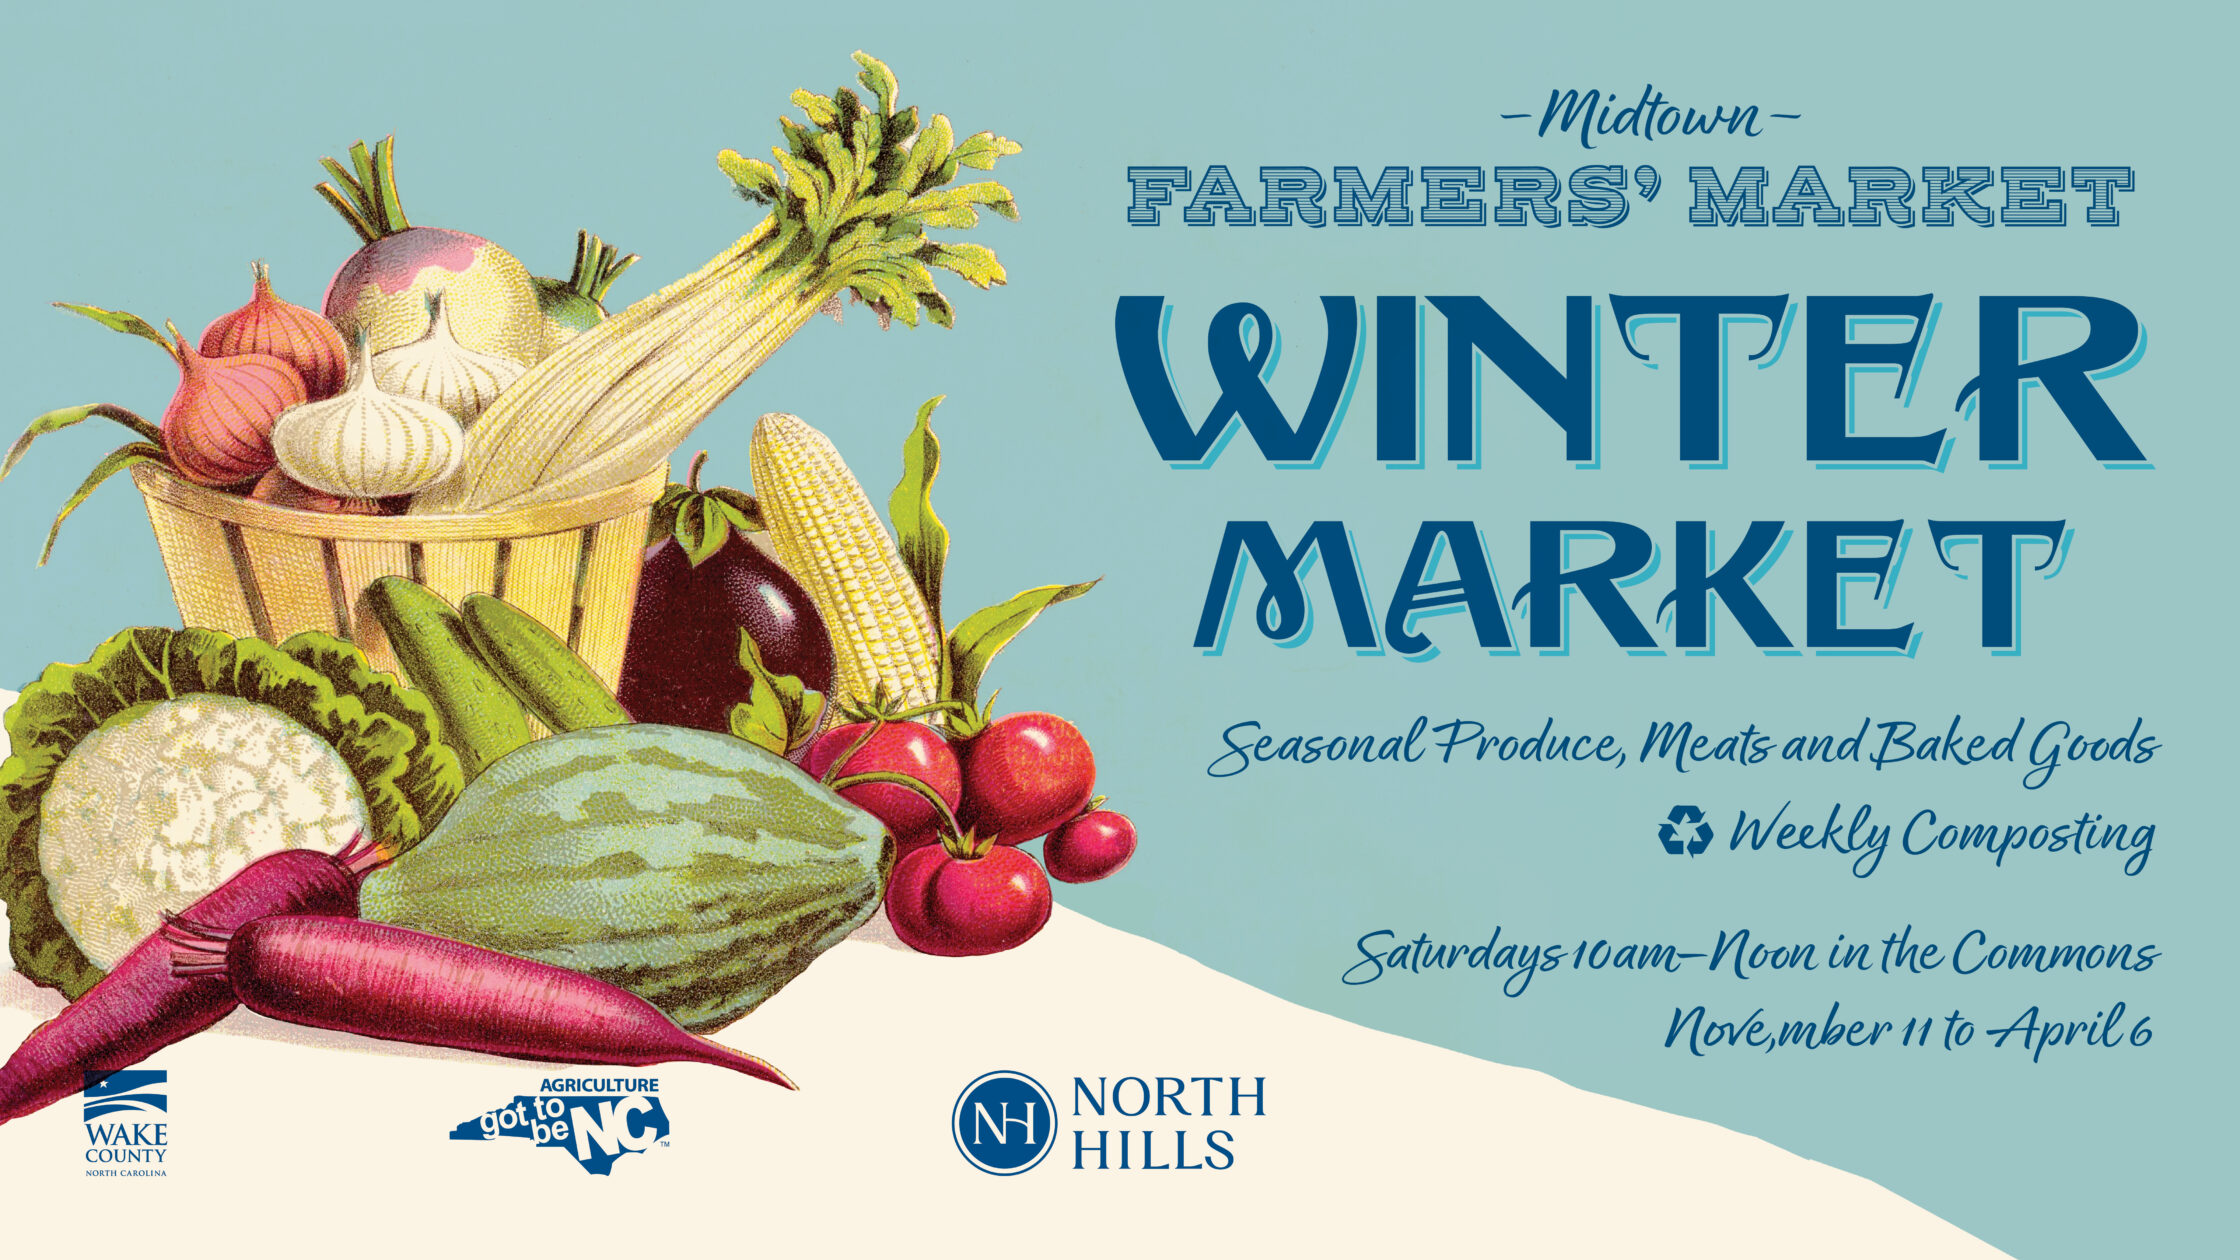 Winter Market Saturdays (November 11 – April 6)